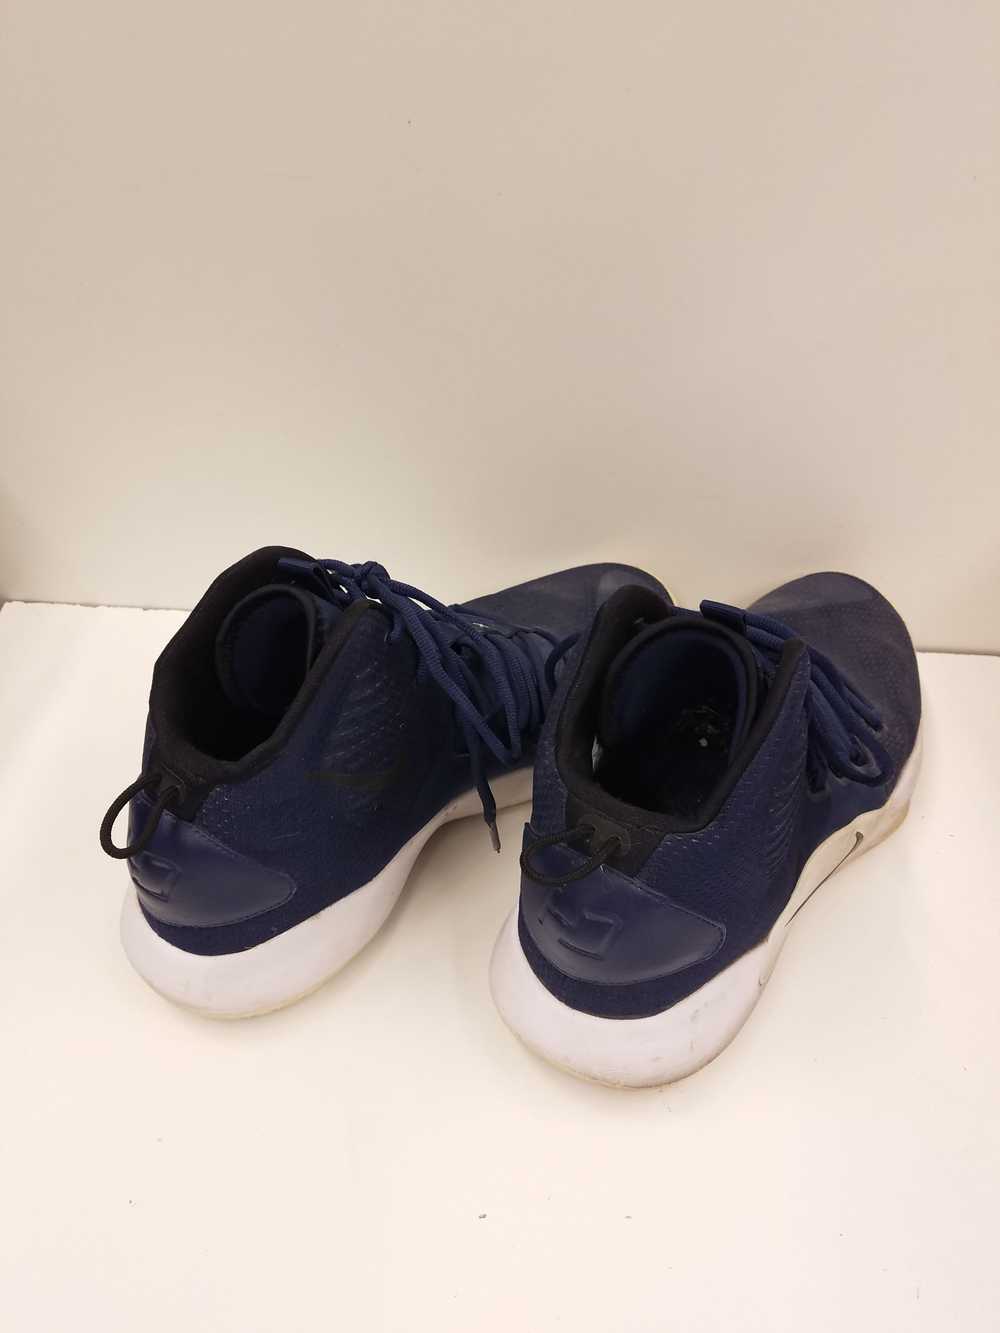 Nike Zoom Hyperdunk X Navy Blue 2018 - Size 14 - image 4